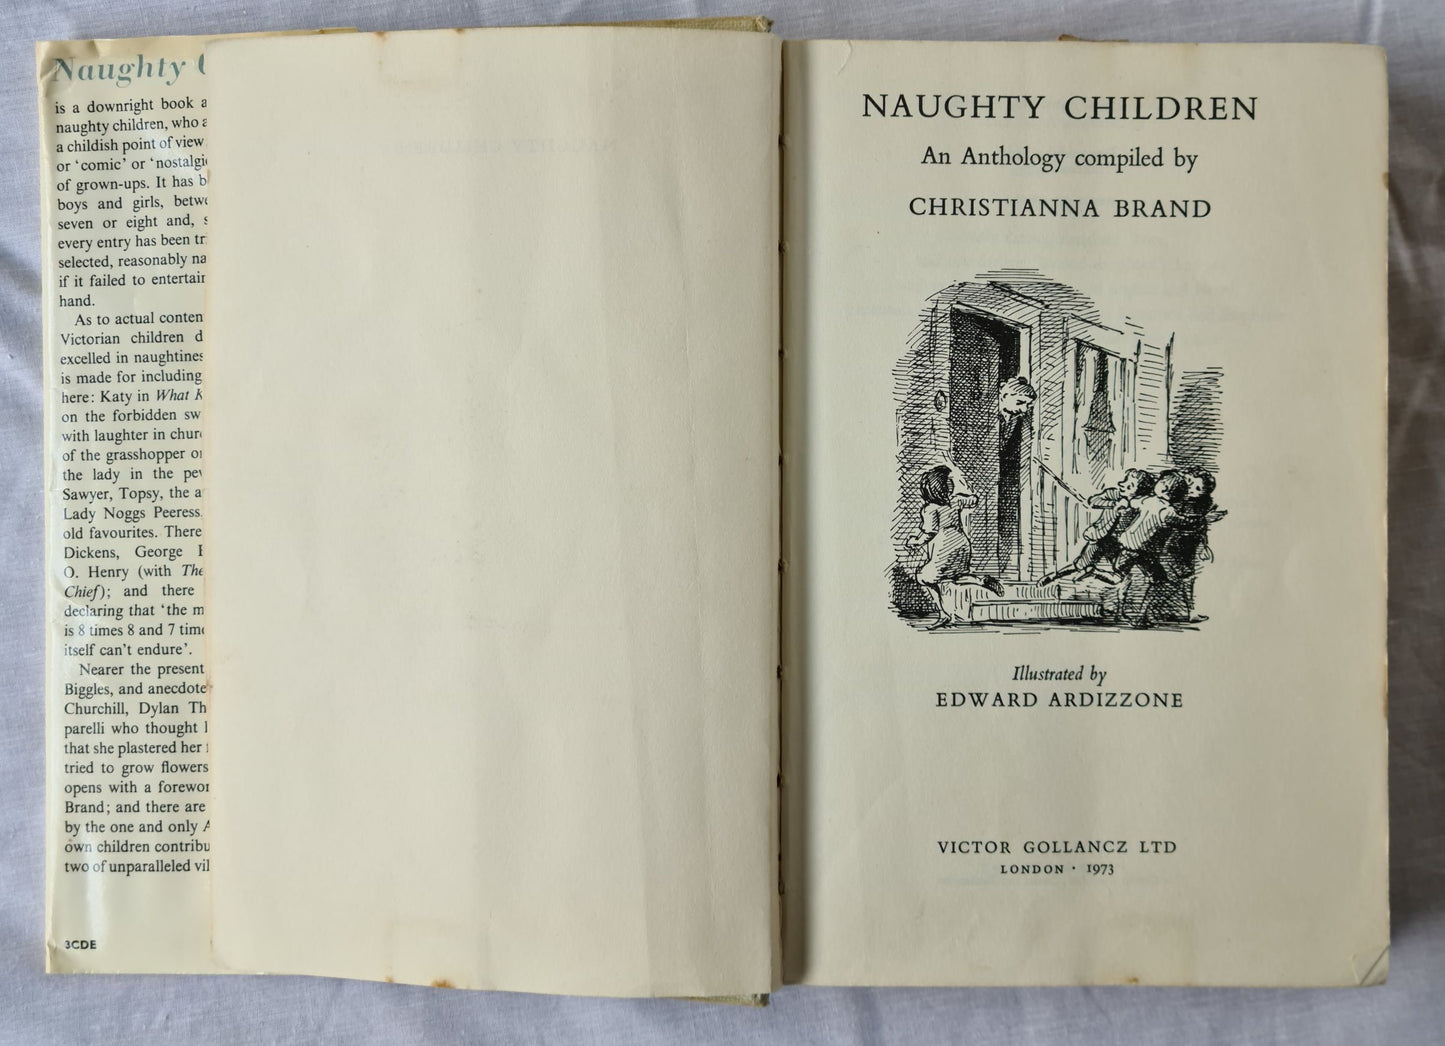 Naughty Children by Christianna Brand